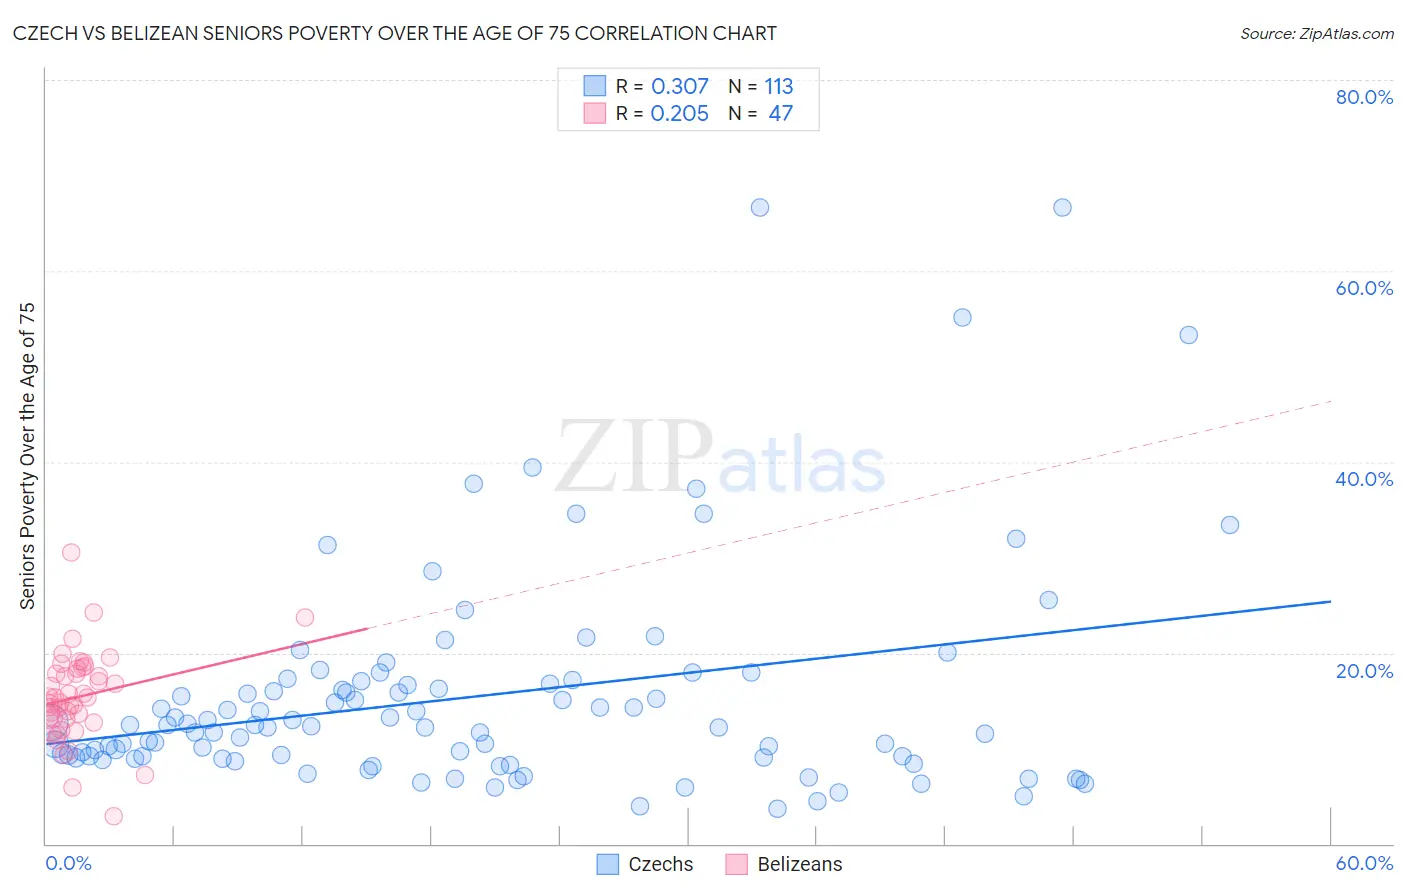 Czech vs Belizean Seniors Poverty Over the Age of 75